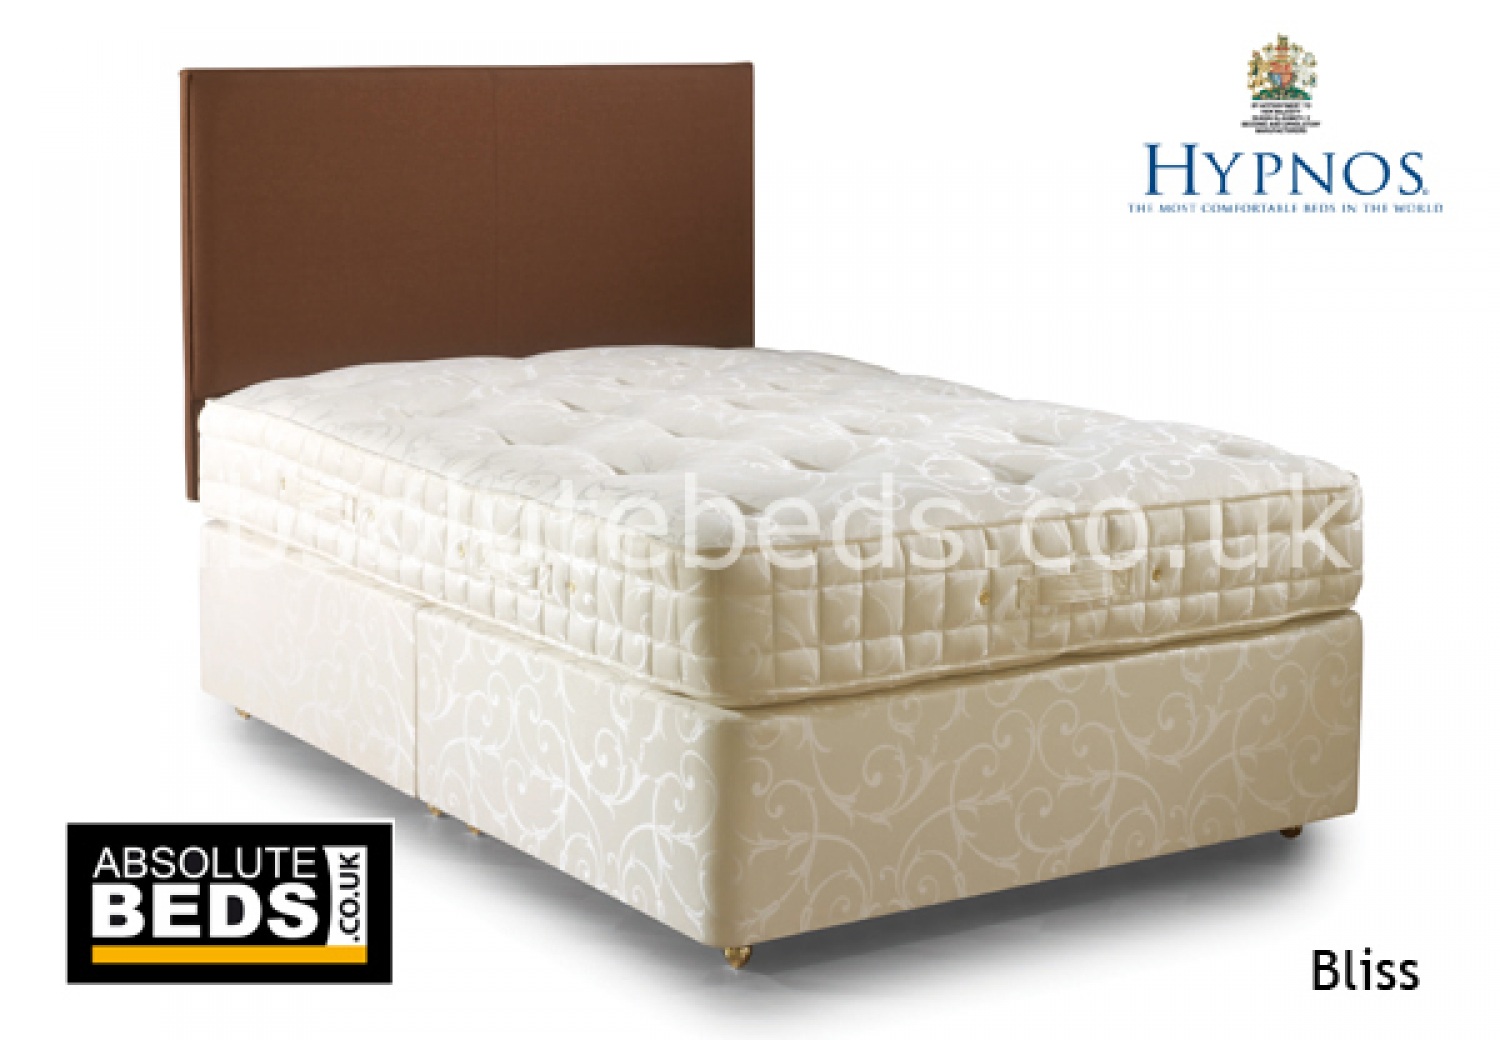 Hypnos Bliss 900 Pocket Sprung Divan Bed image